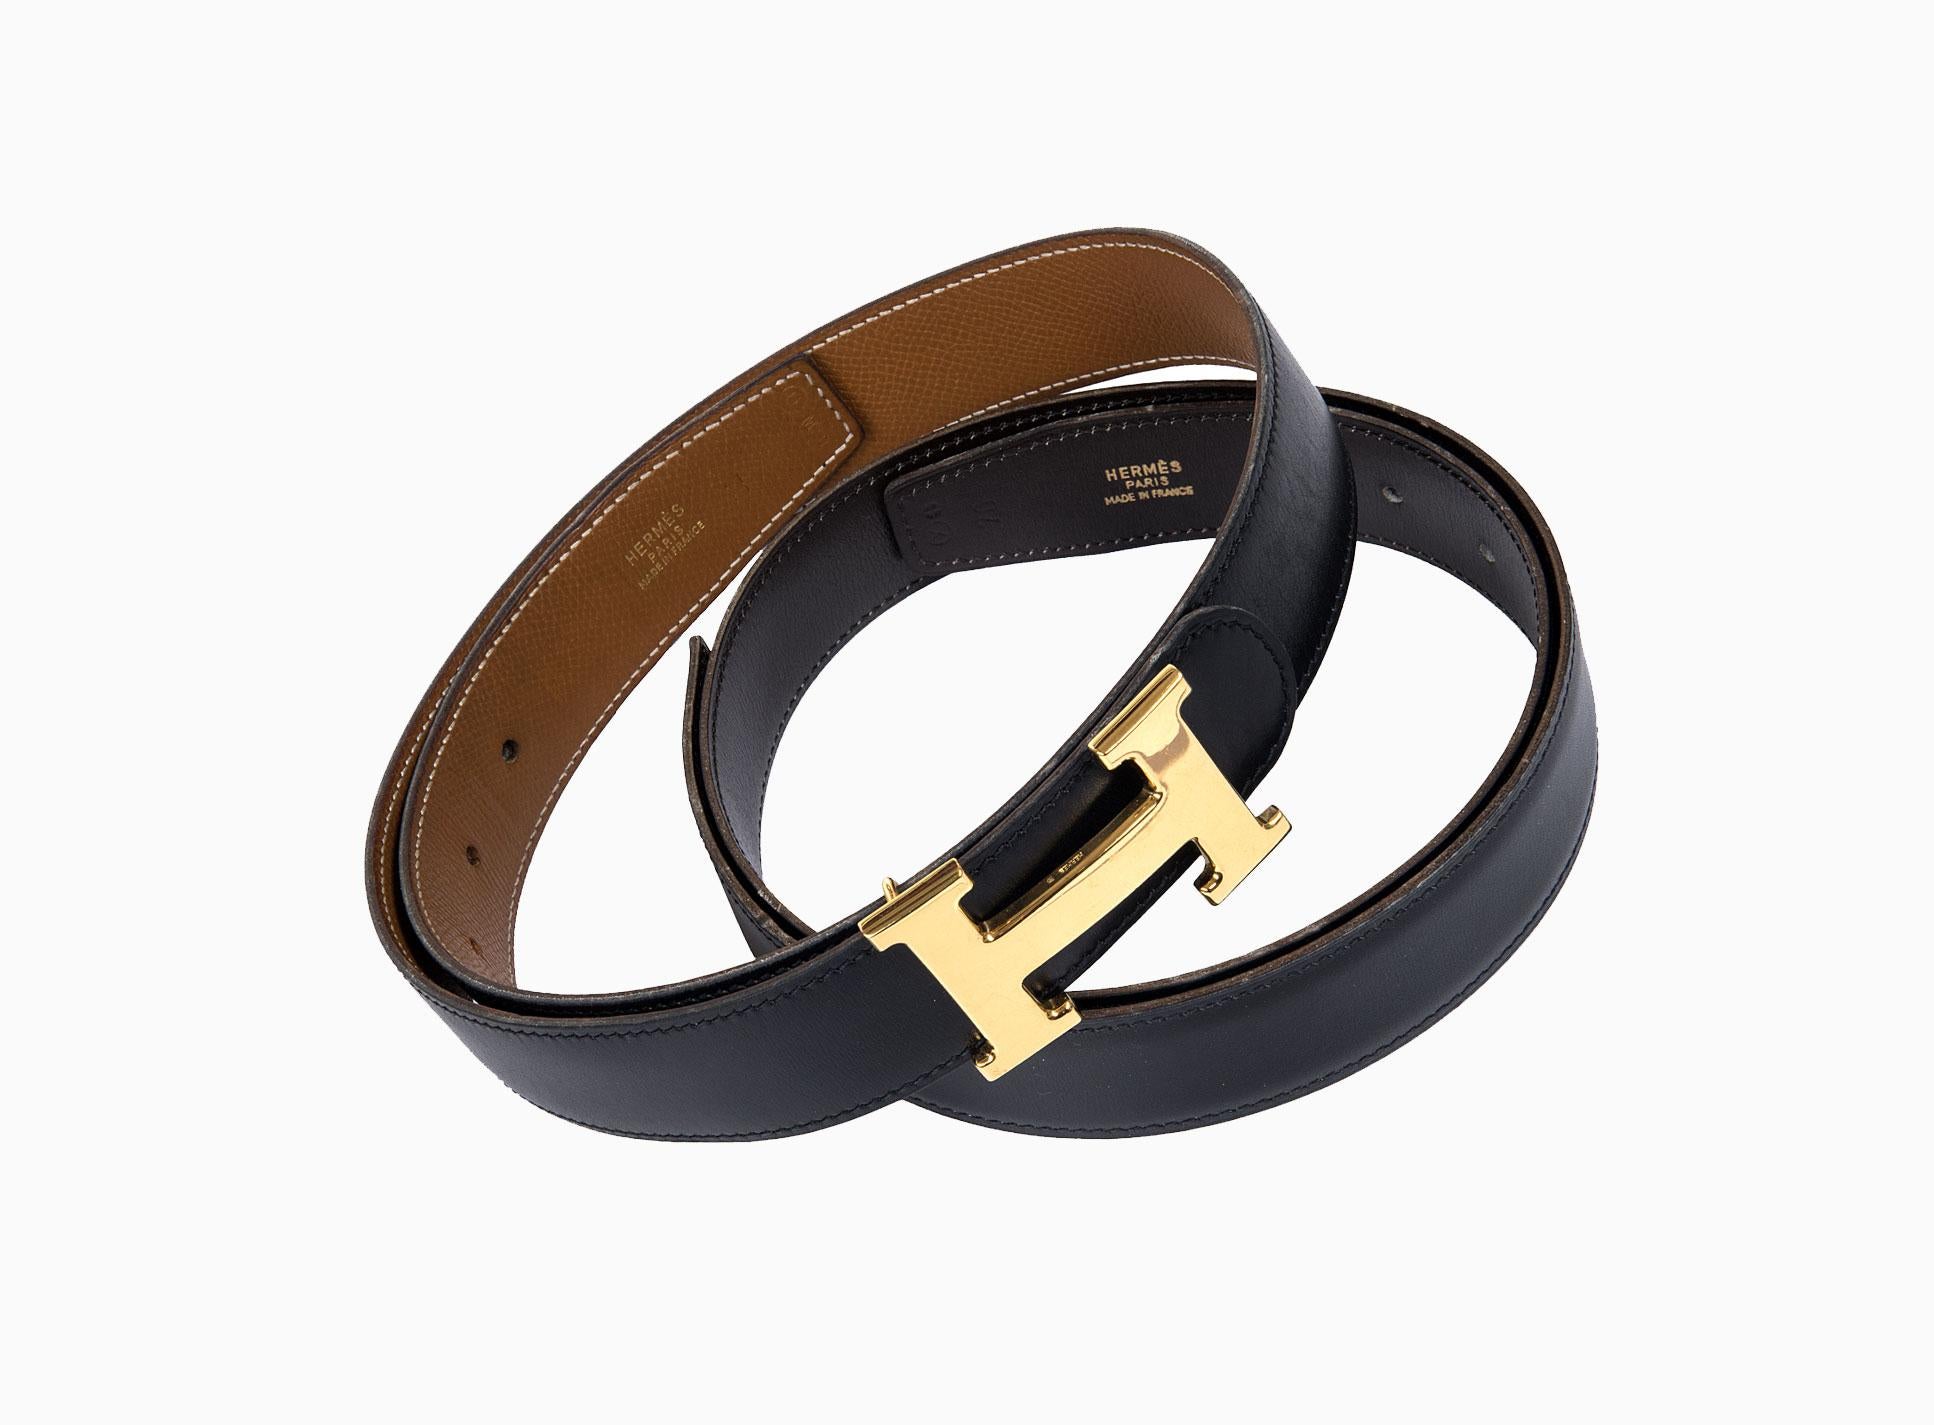 Two Hermes Reversible Vintage Belts 70cm - Tan/Black & Choc/Black Gold H Buckle (Schwarz)